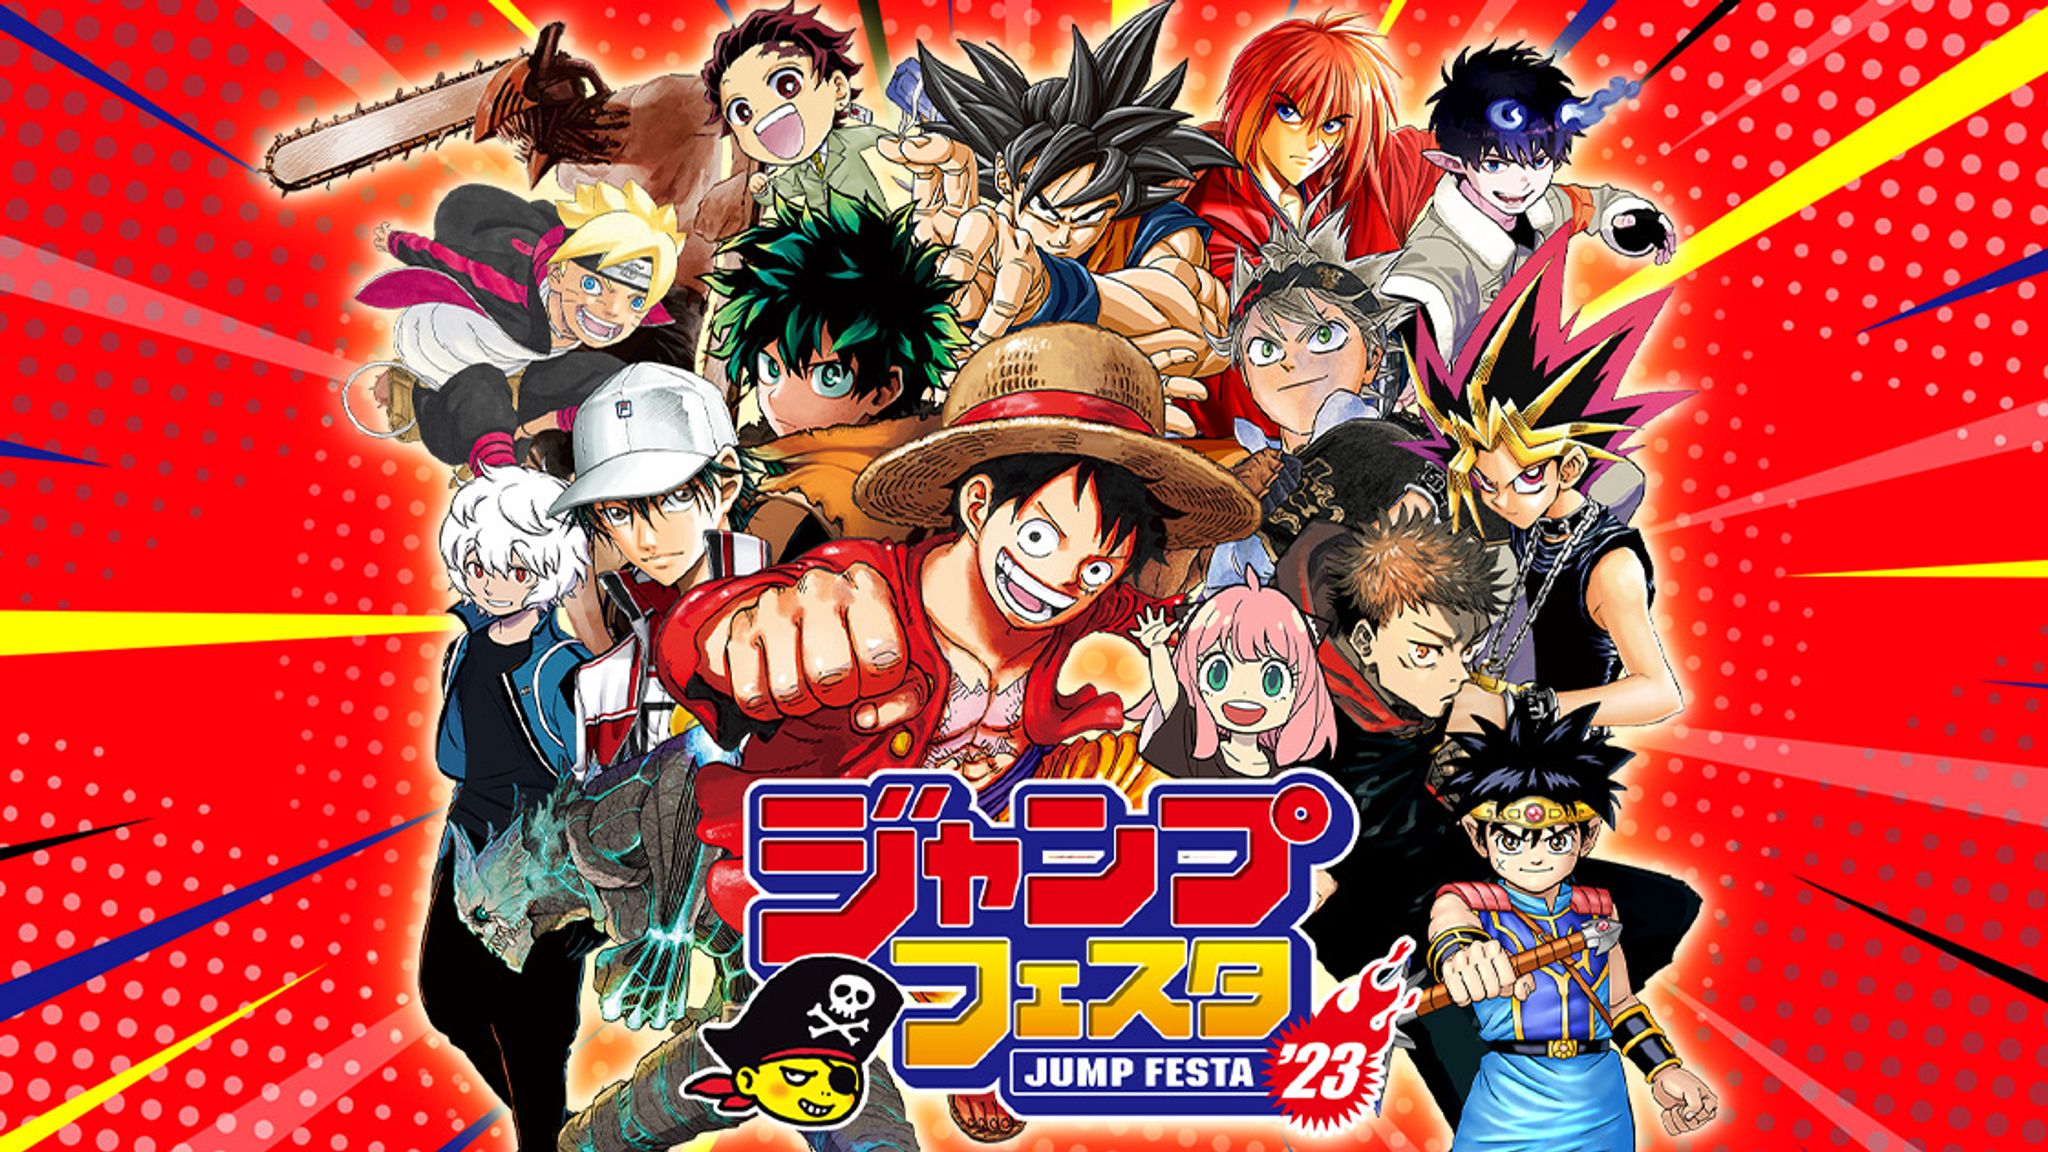 Many huge announcements at Jump Festa! #anime #animefan #japan #weeb #